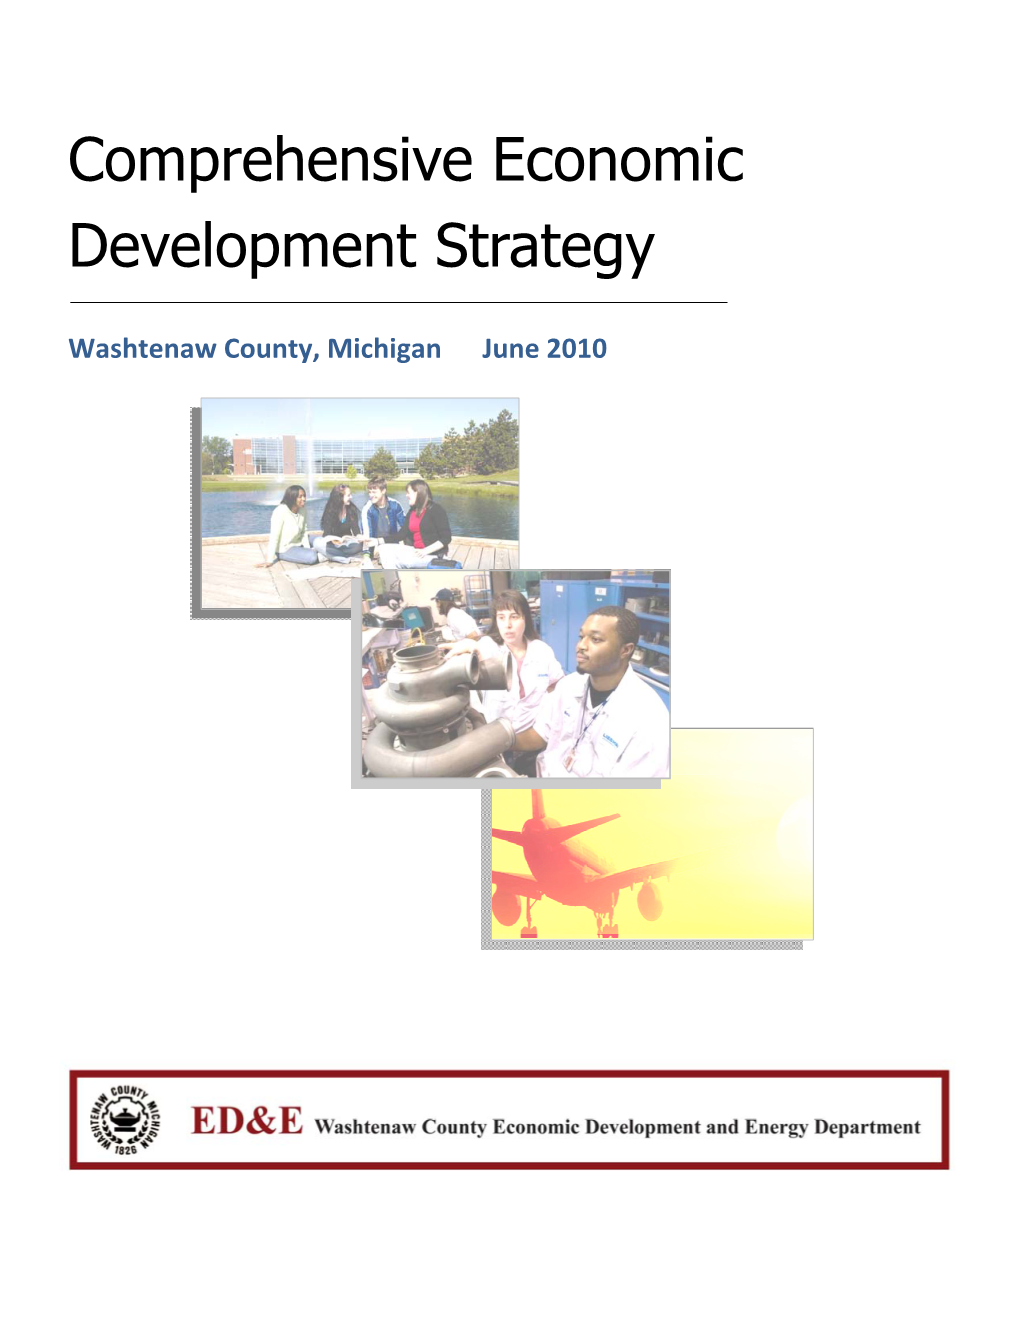 2010 Comprehensive Economic Development Strategy